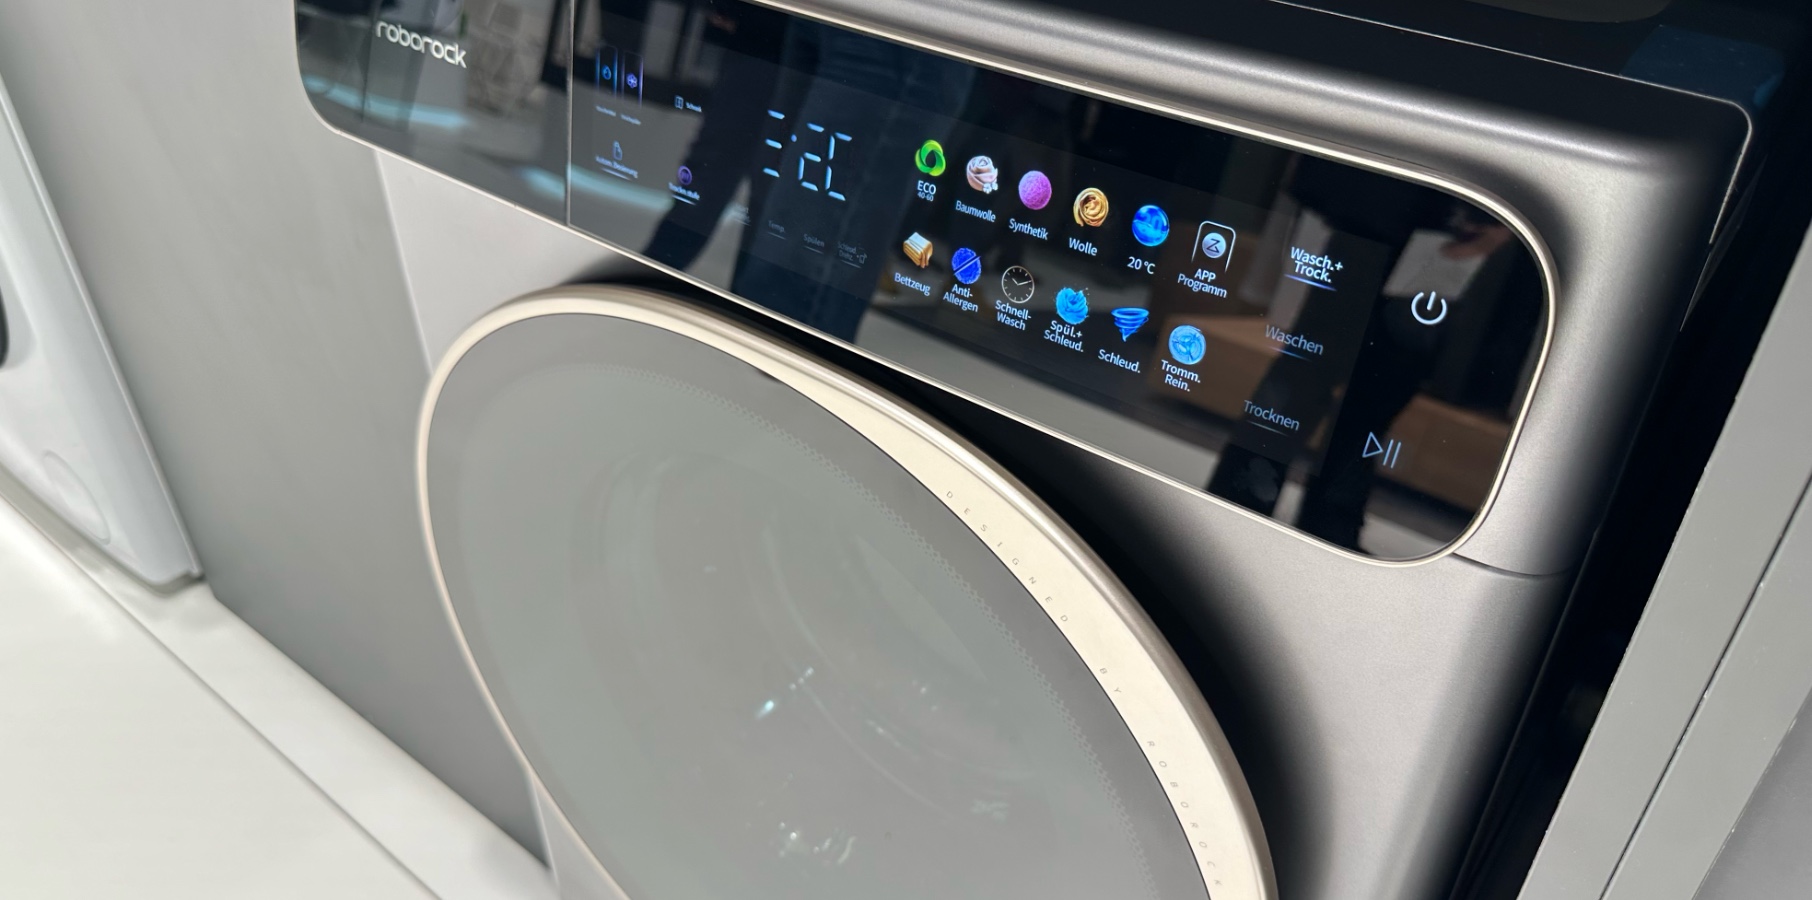 Roborock washing machine at IFA 2023